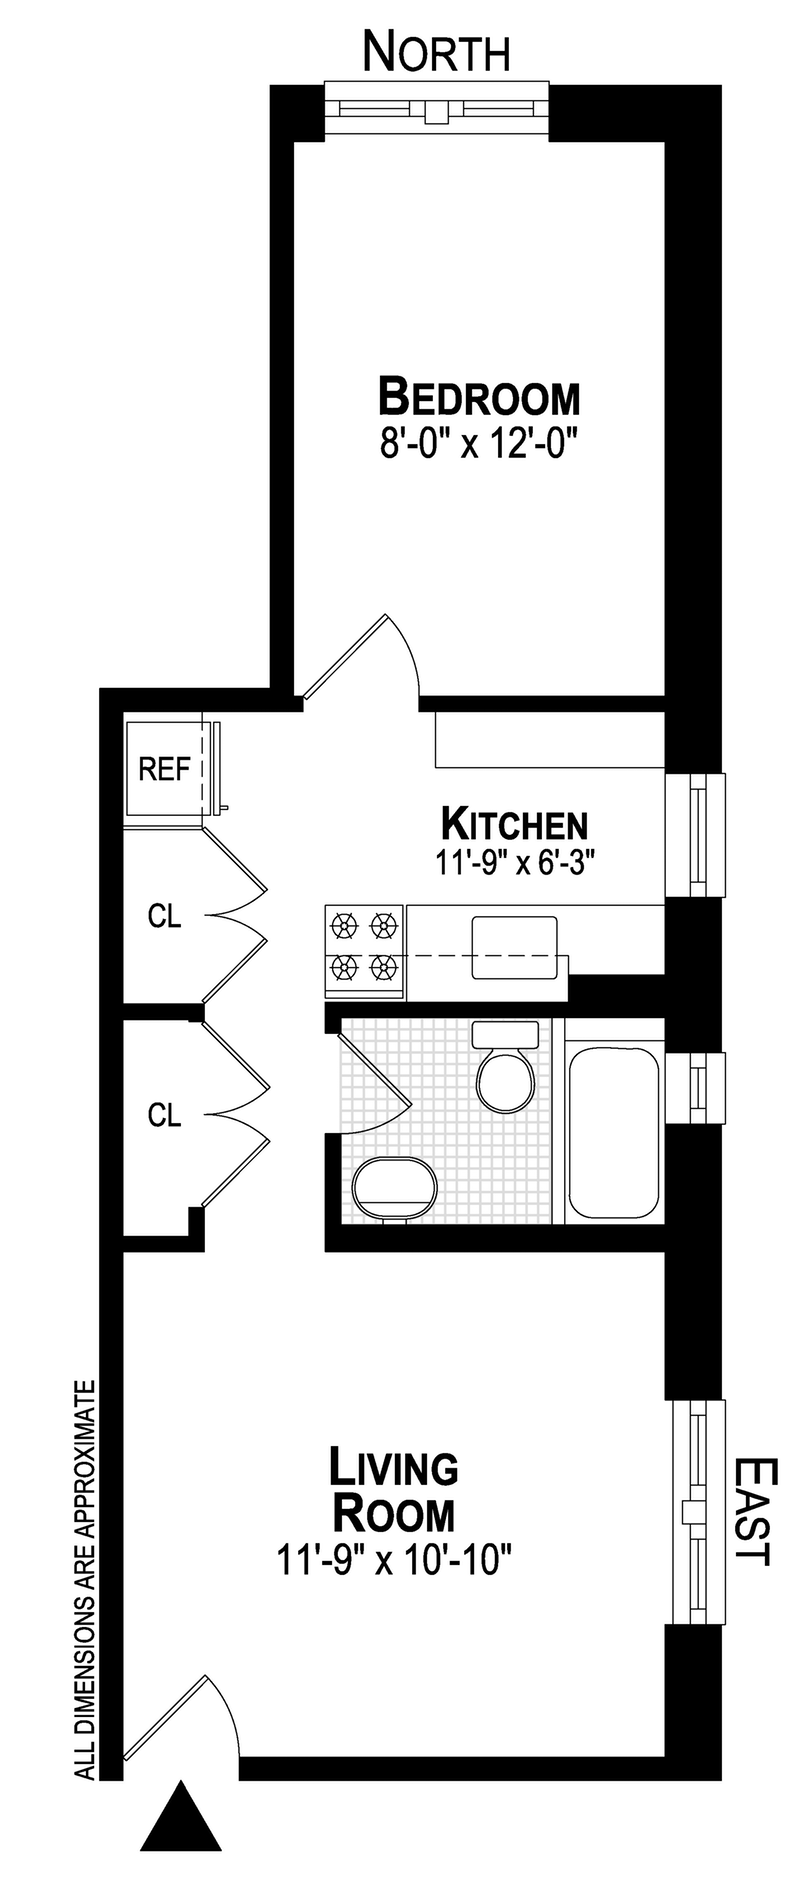 Floorplan for 149 West 12th Street